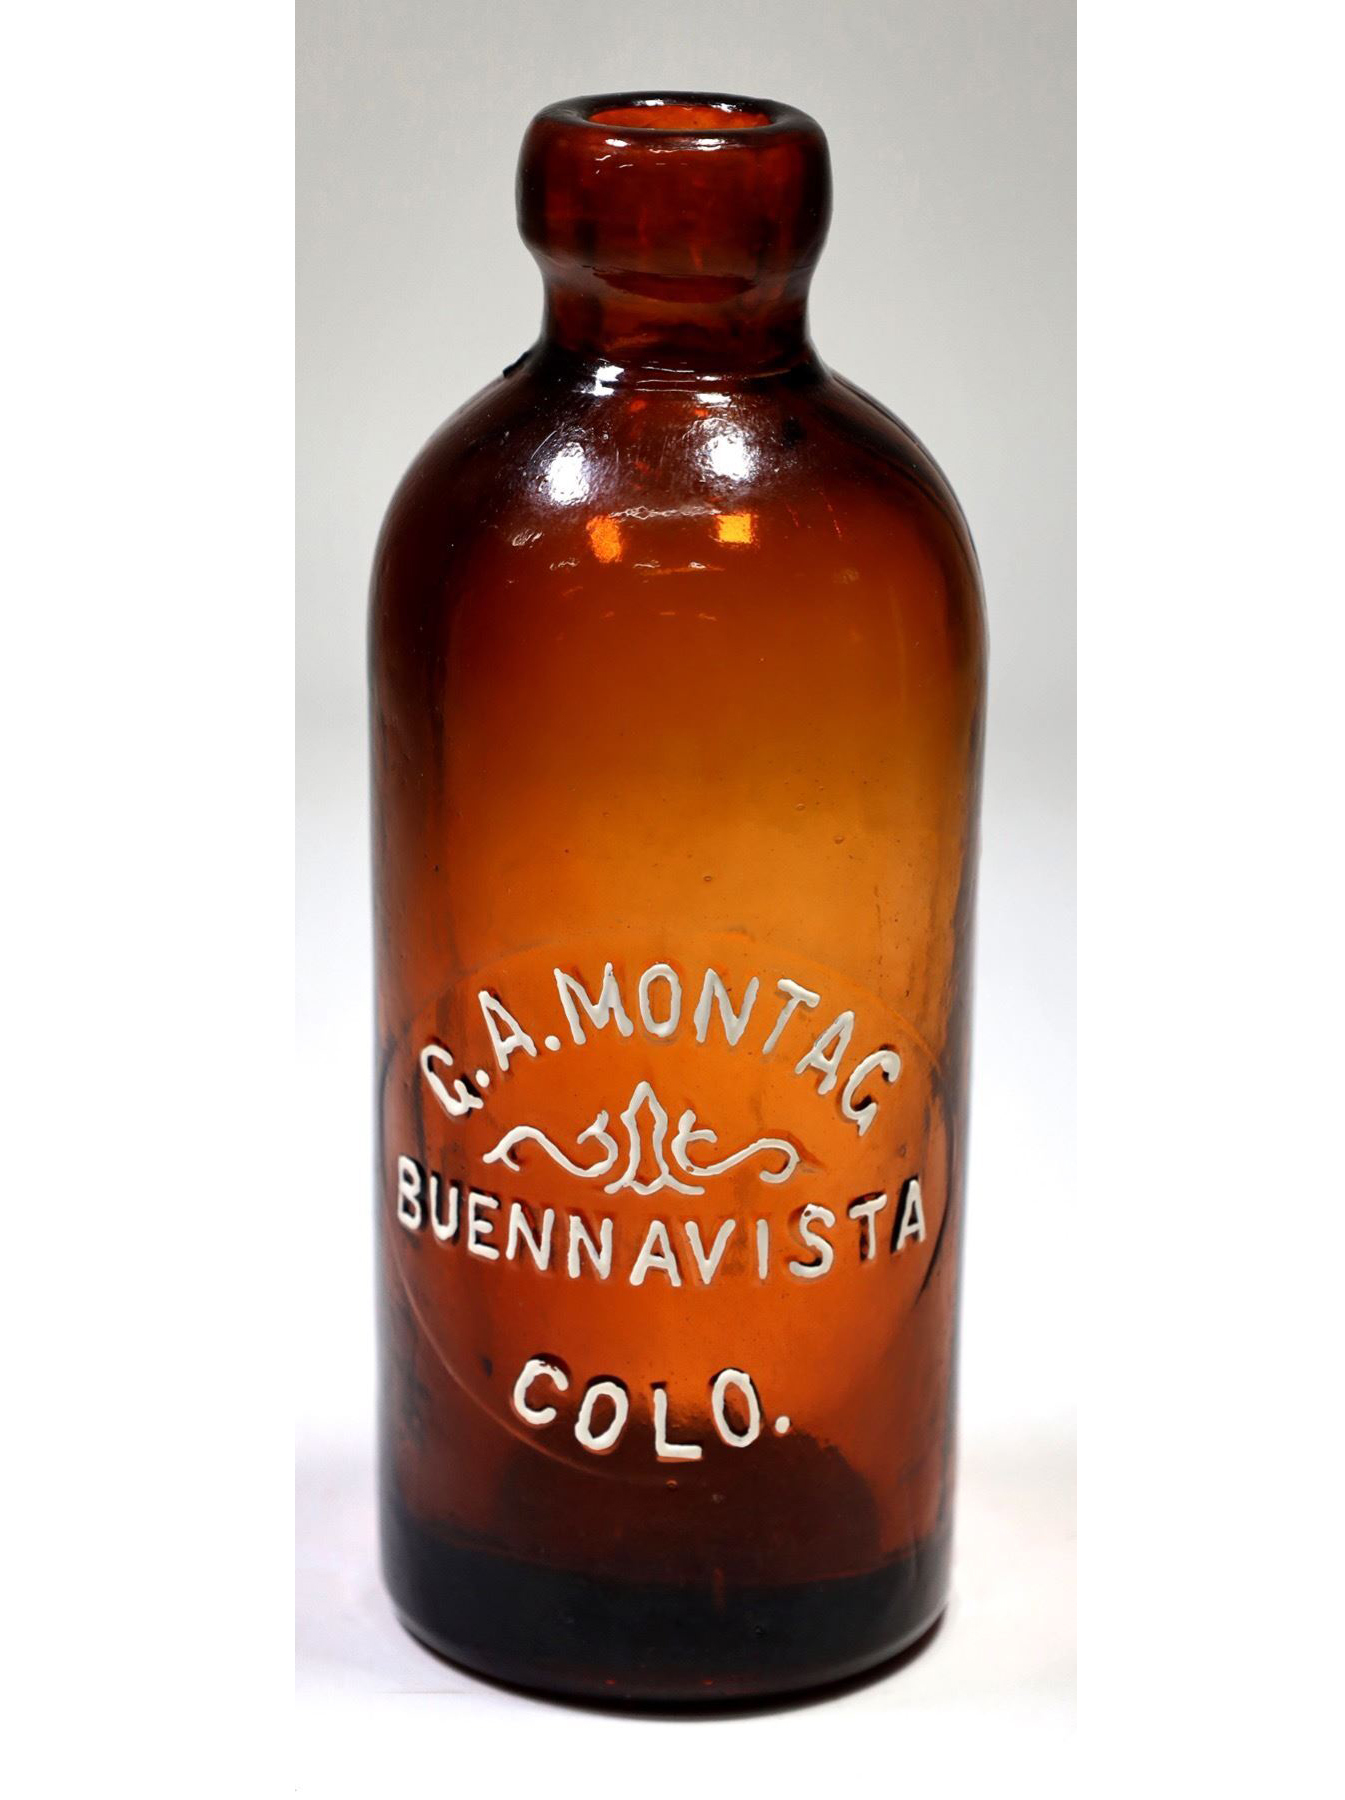 Circa-1888-1889 Montag Buena Vista hutch soda bottle, $3,375